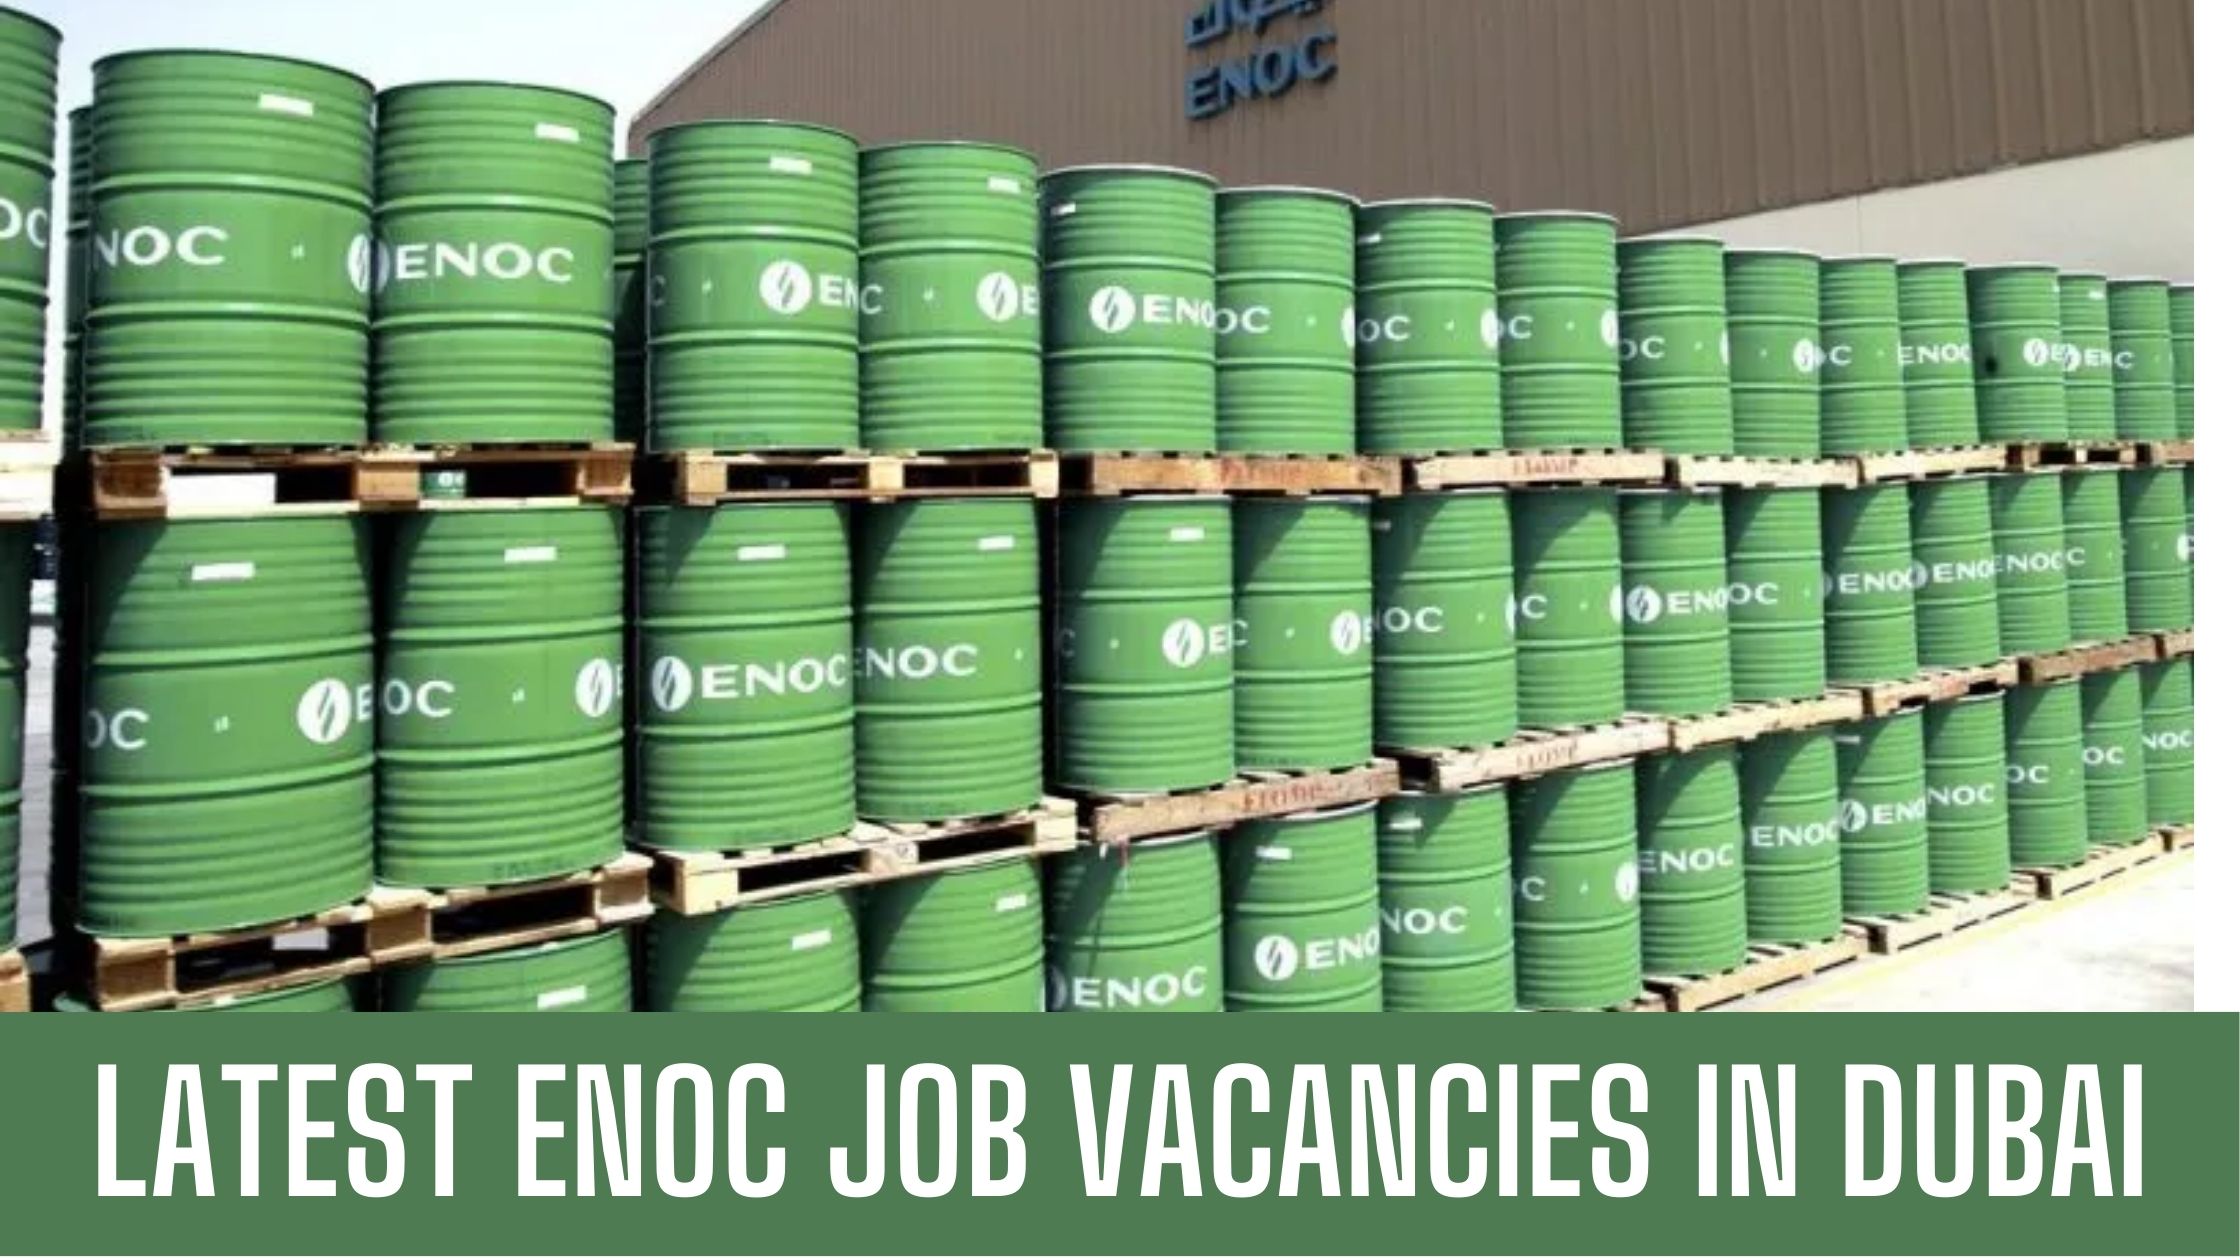 ENOC Jobs in Dubai Emirates National Oil Company Jobs Apply Now